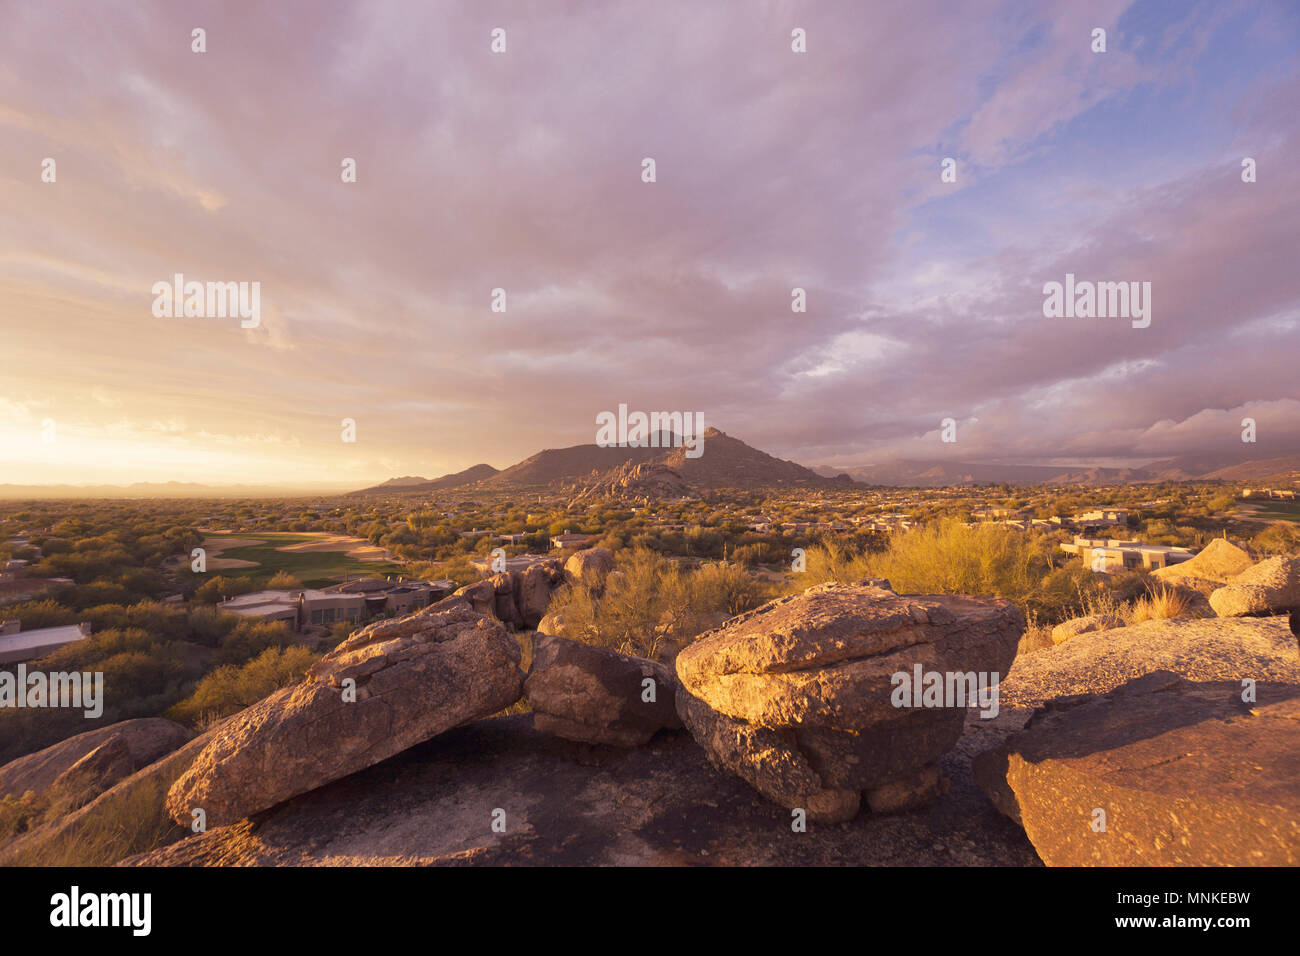 Camelback mountain arizona hi-res stock photography and images - Alamy